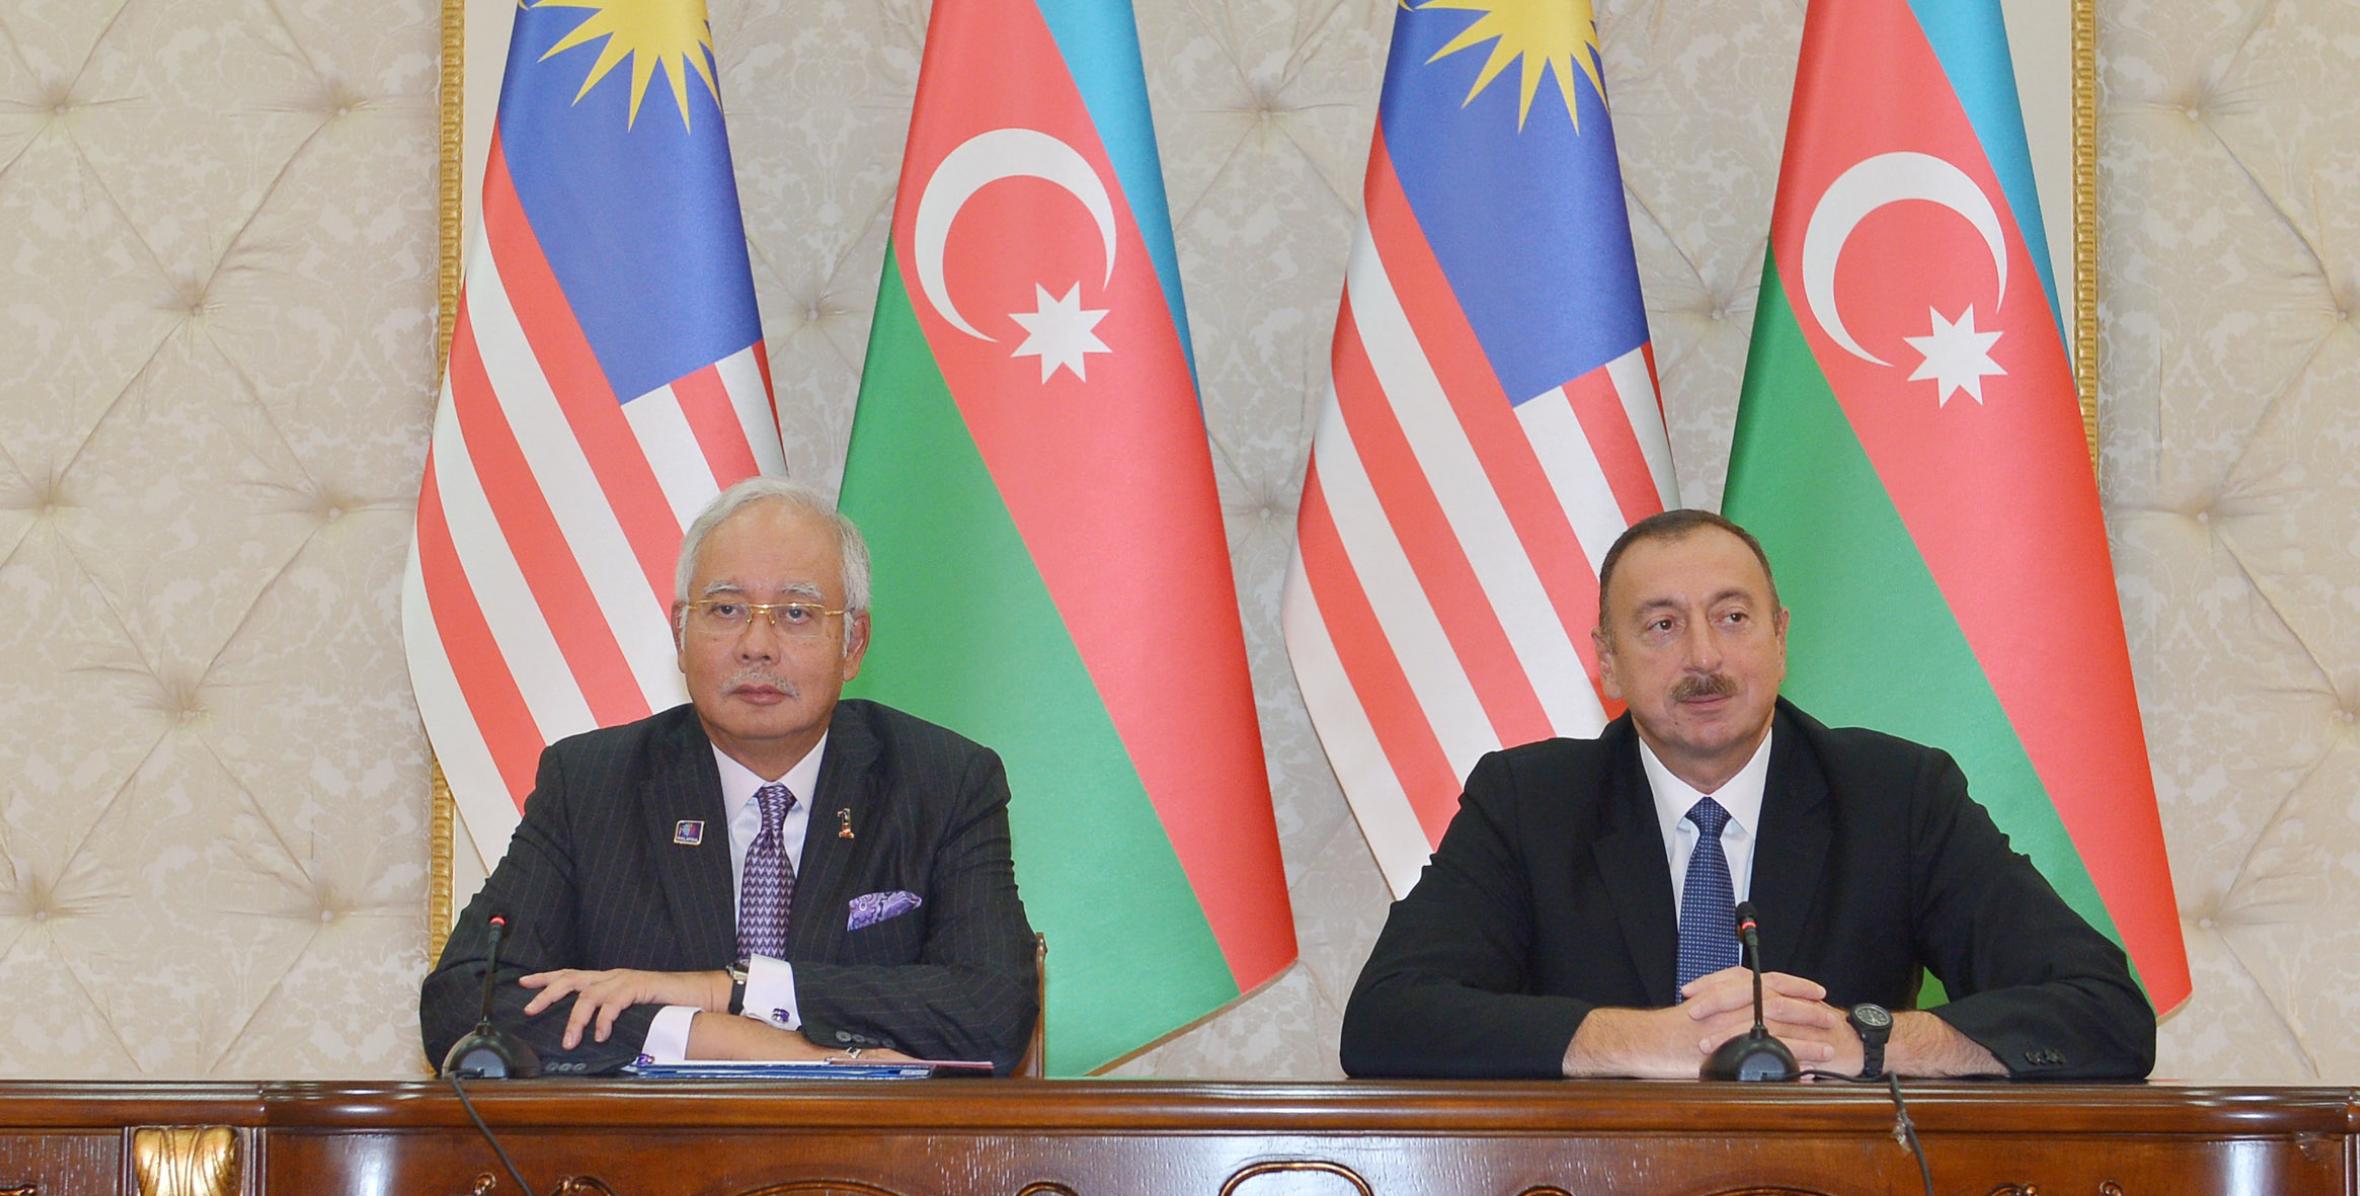 Ilham Aliyev and Prime Minister of Malaysia Mohammad Najib Tun Abdul Razak made statements for the press